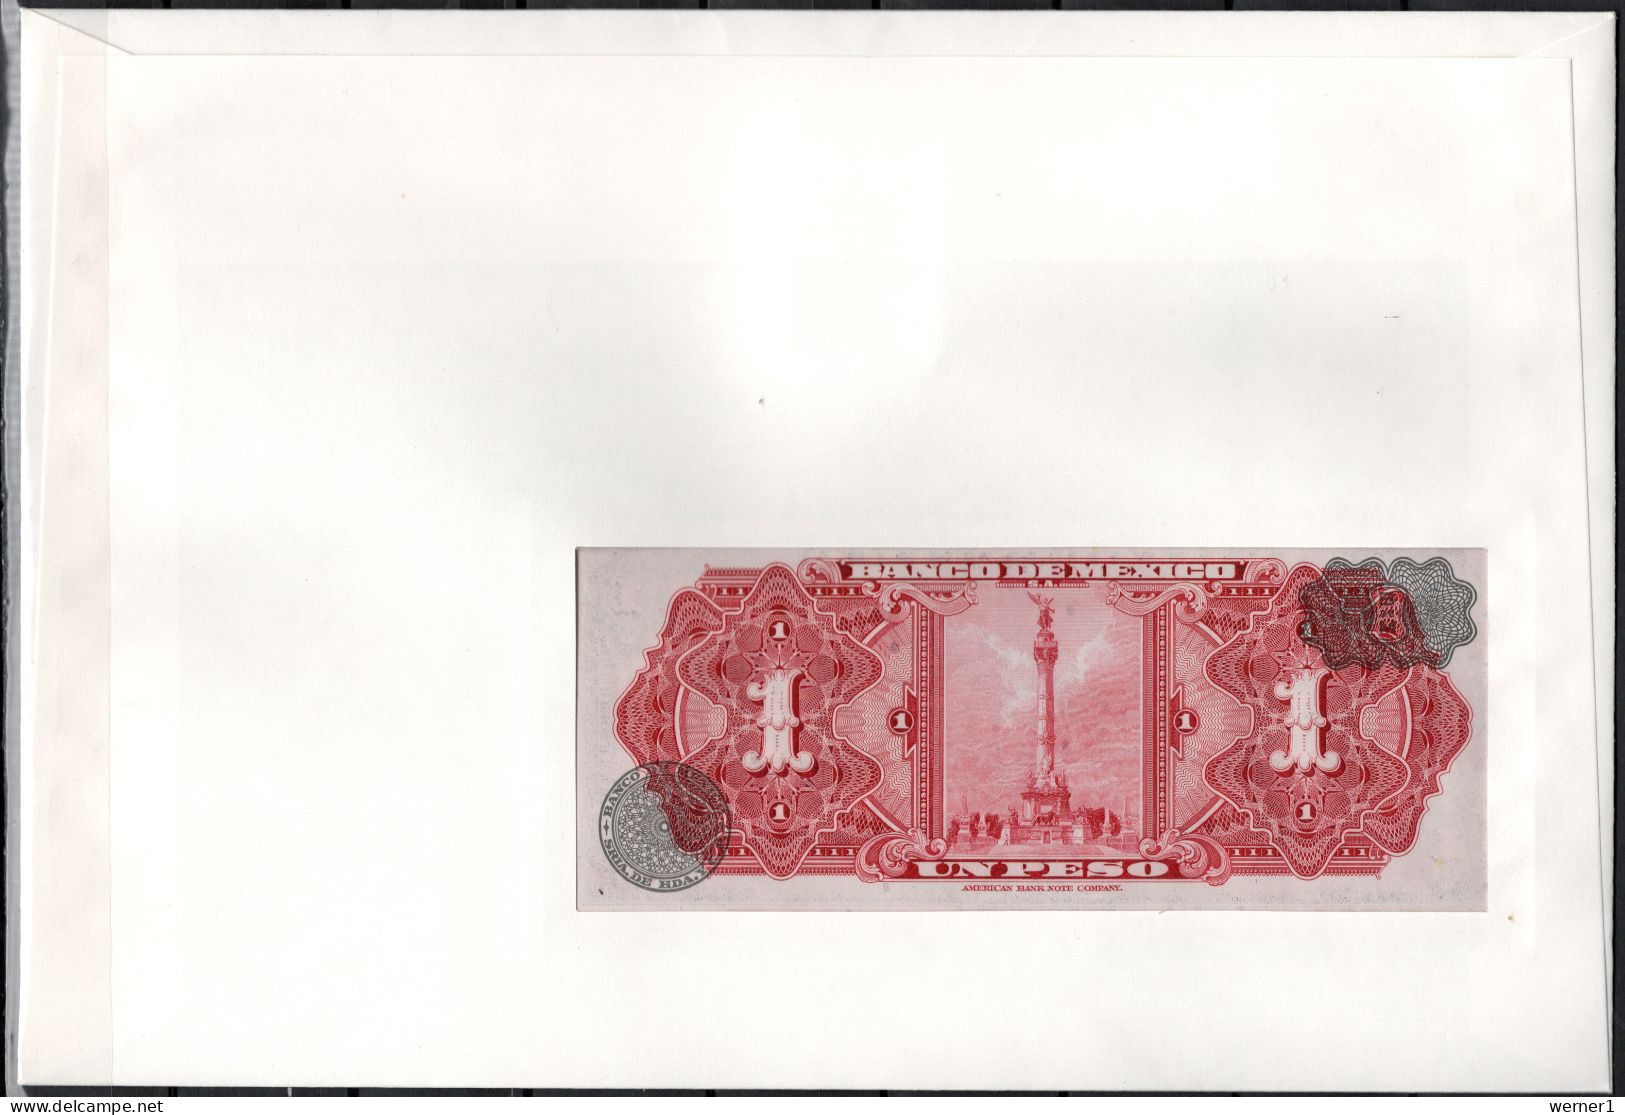 Mexico 1973 Numismatic Cover With 1 Peso Banknote, Aztec Solar Calendar - Mexico